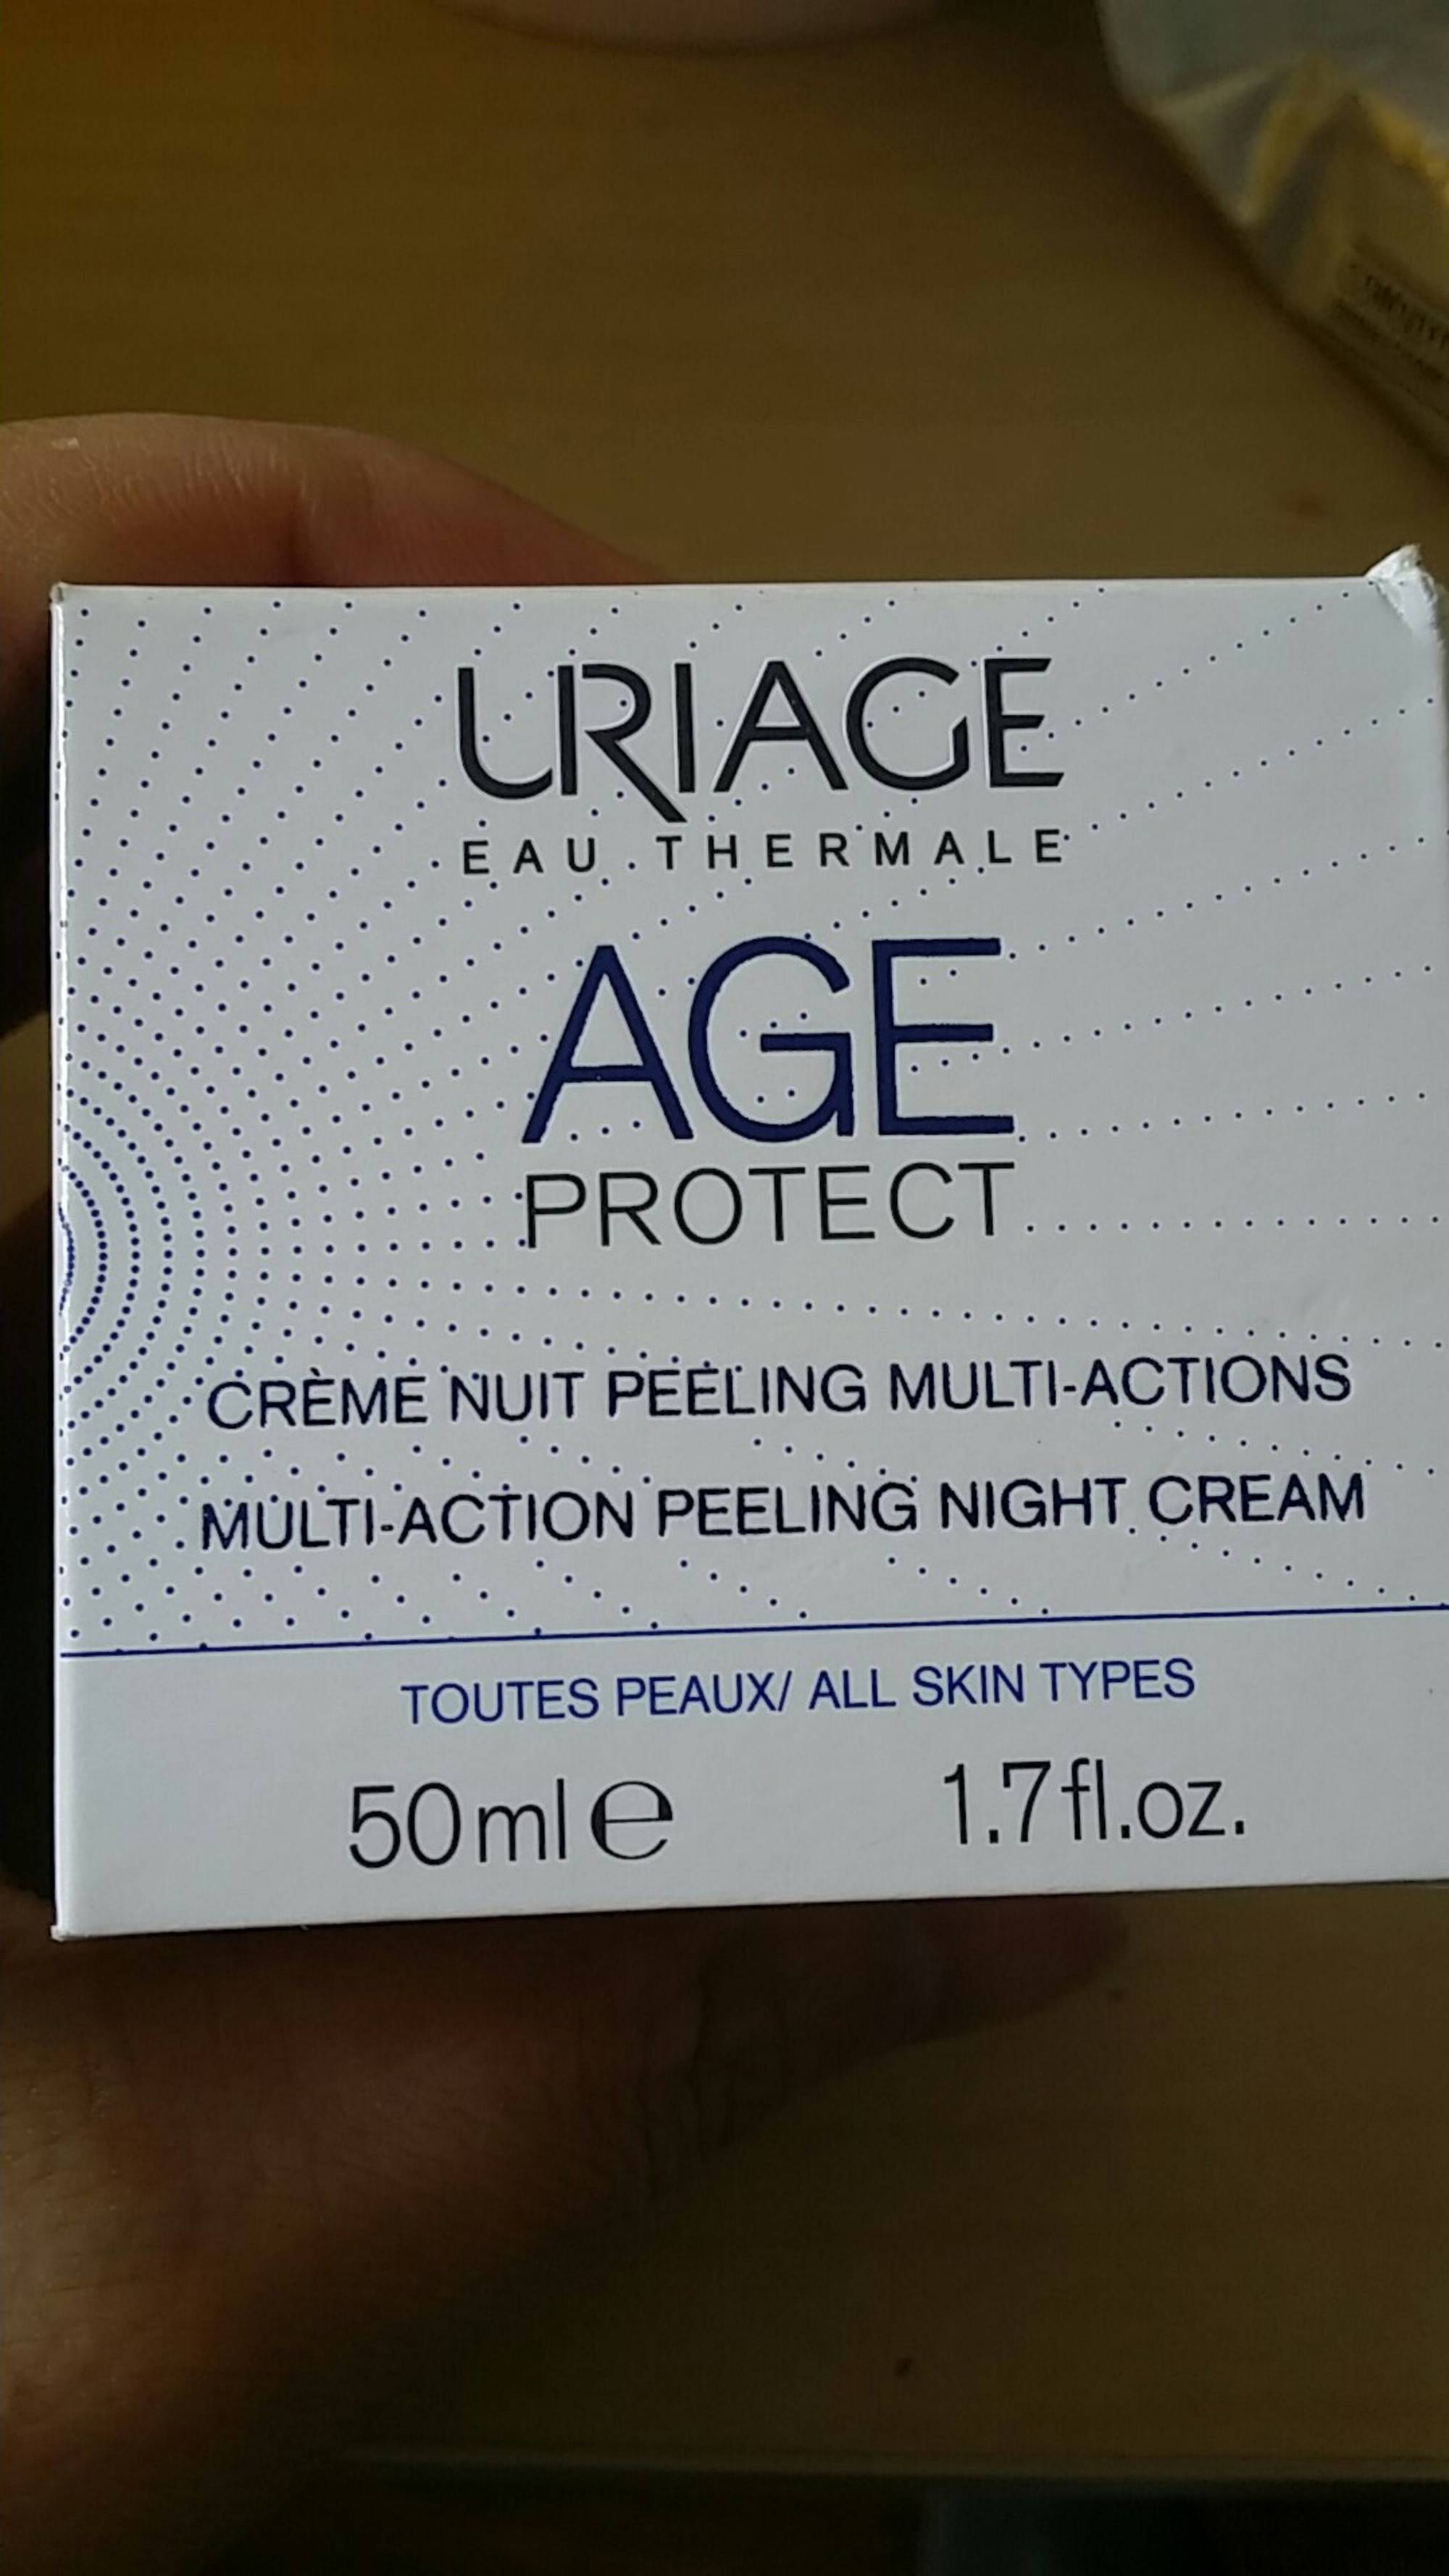 URIAGE - Age protect - Crème nuit peeling multi-actions